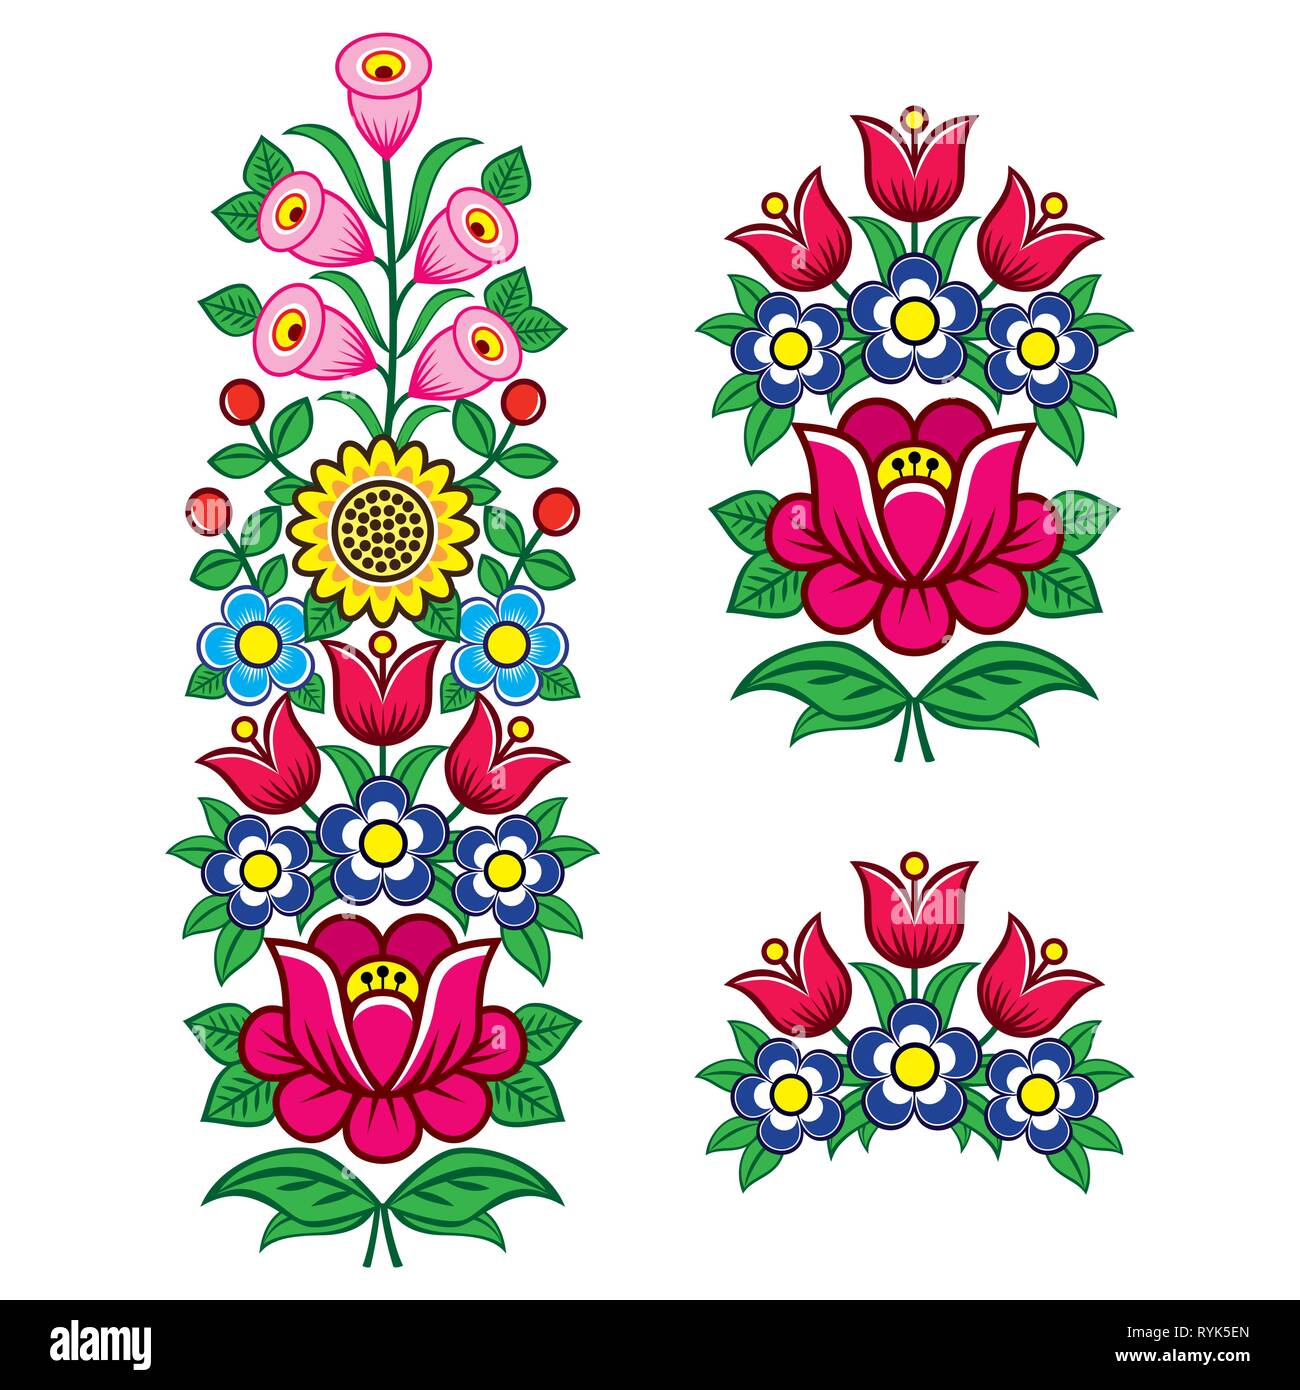 Floral Polish folk art vector design elements, motifs for weddding invitation, greeting card, Zalipie patterns with flowers Stock Vector